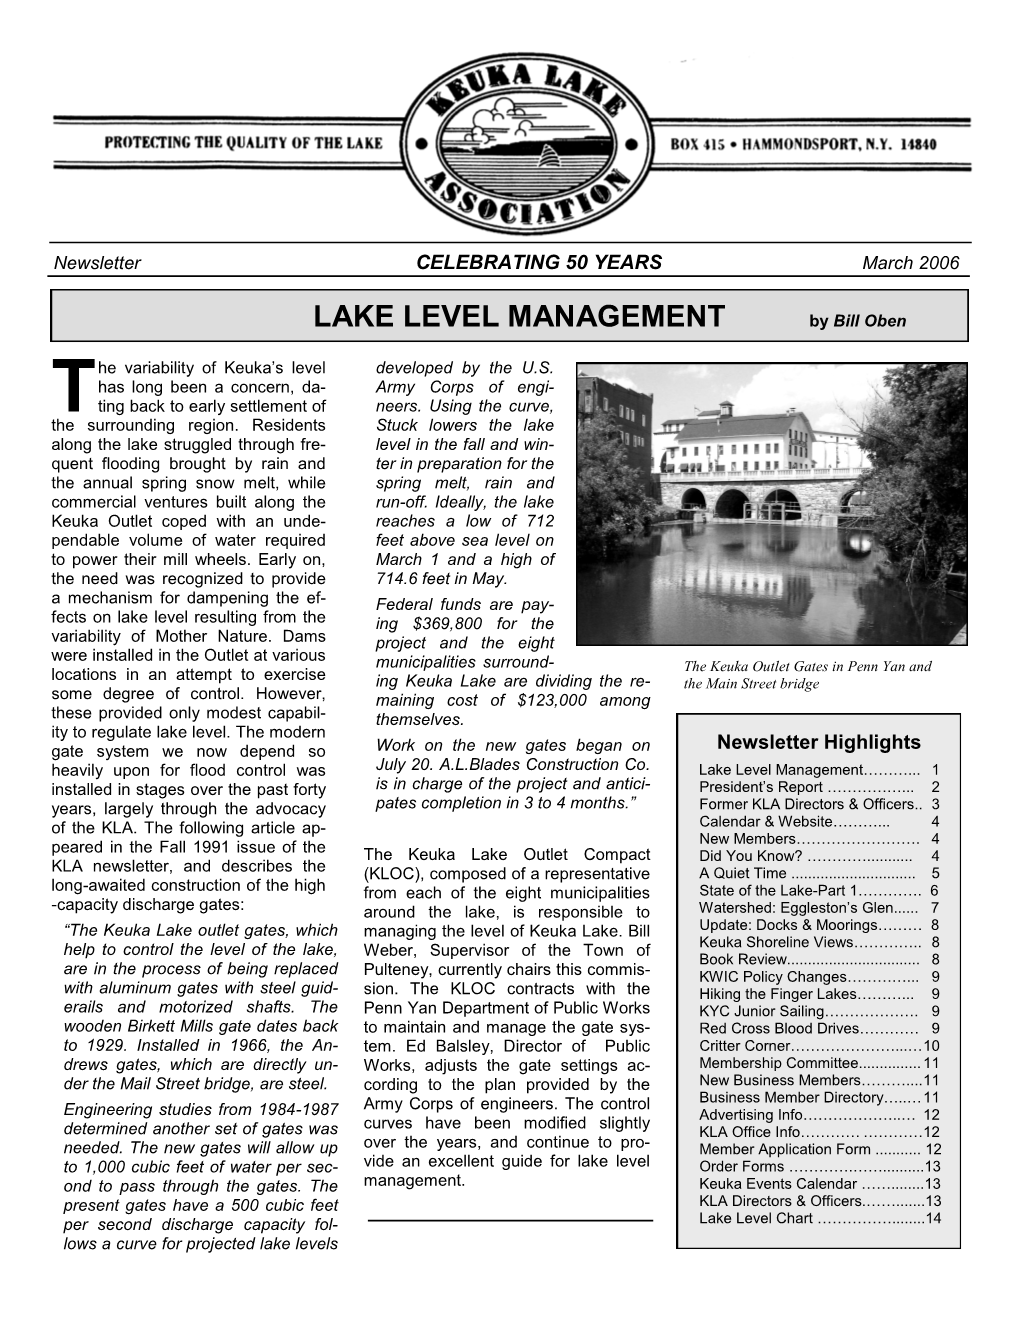 LAKE LEVEL MANAGEMENT by Bill Oben